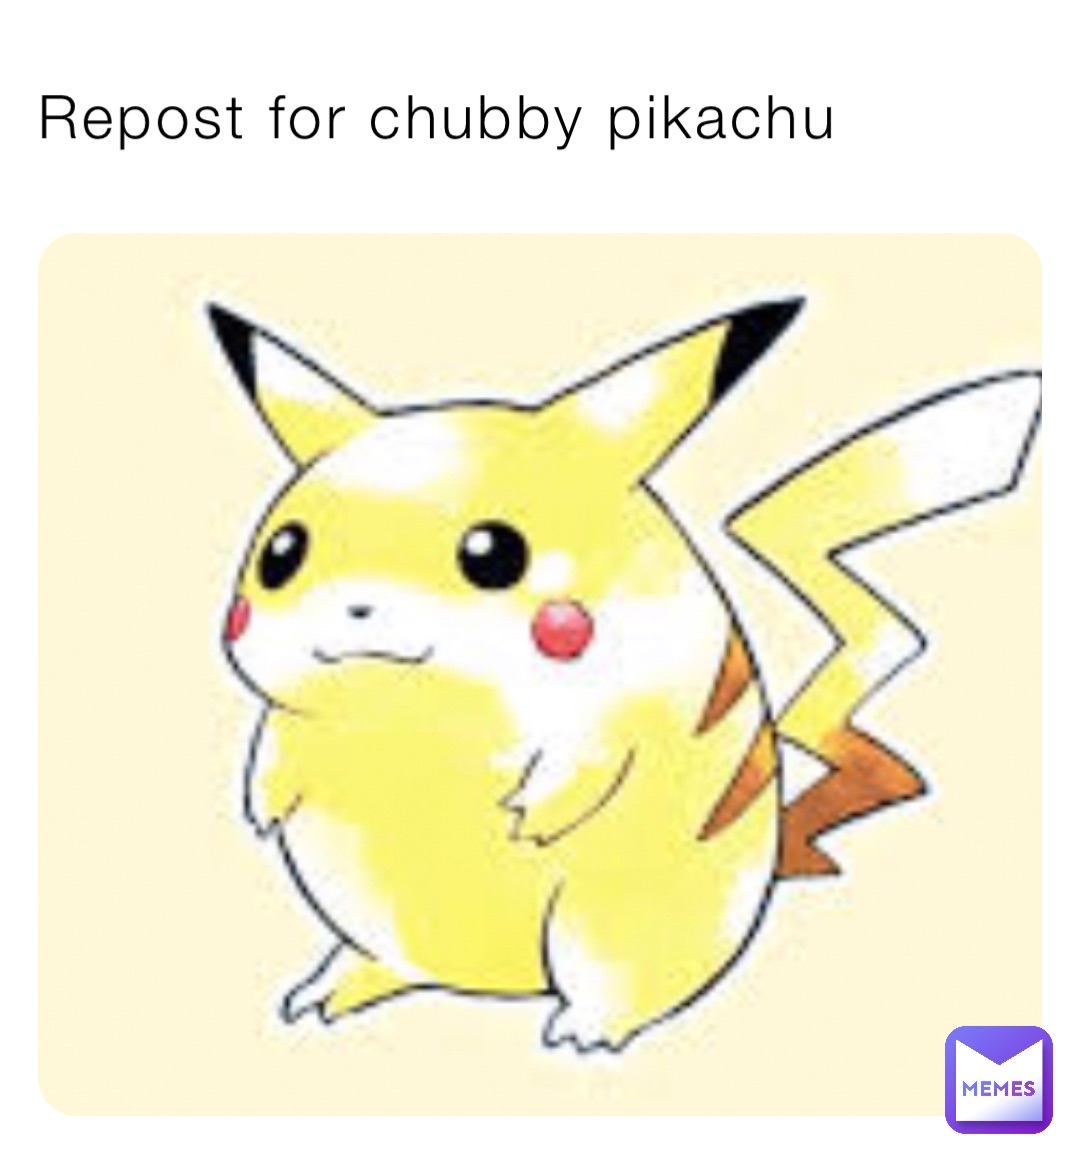 Repost for chubby pikachu